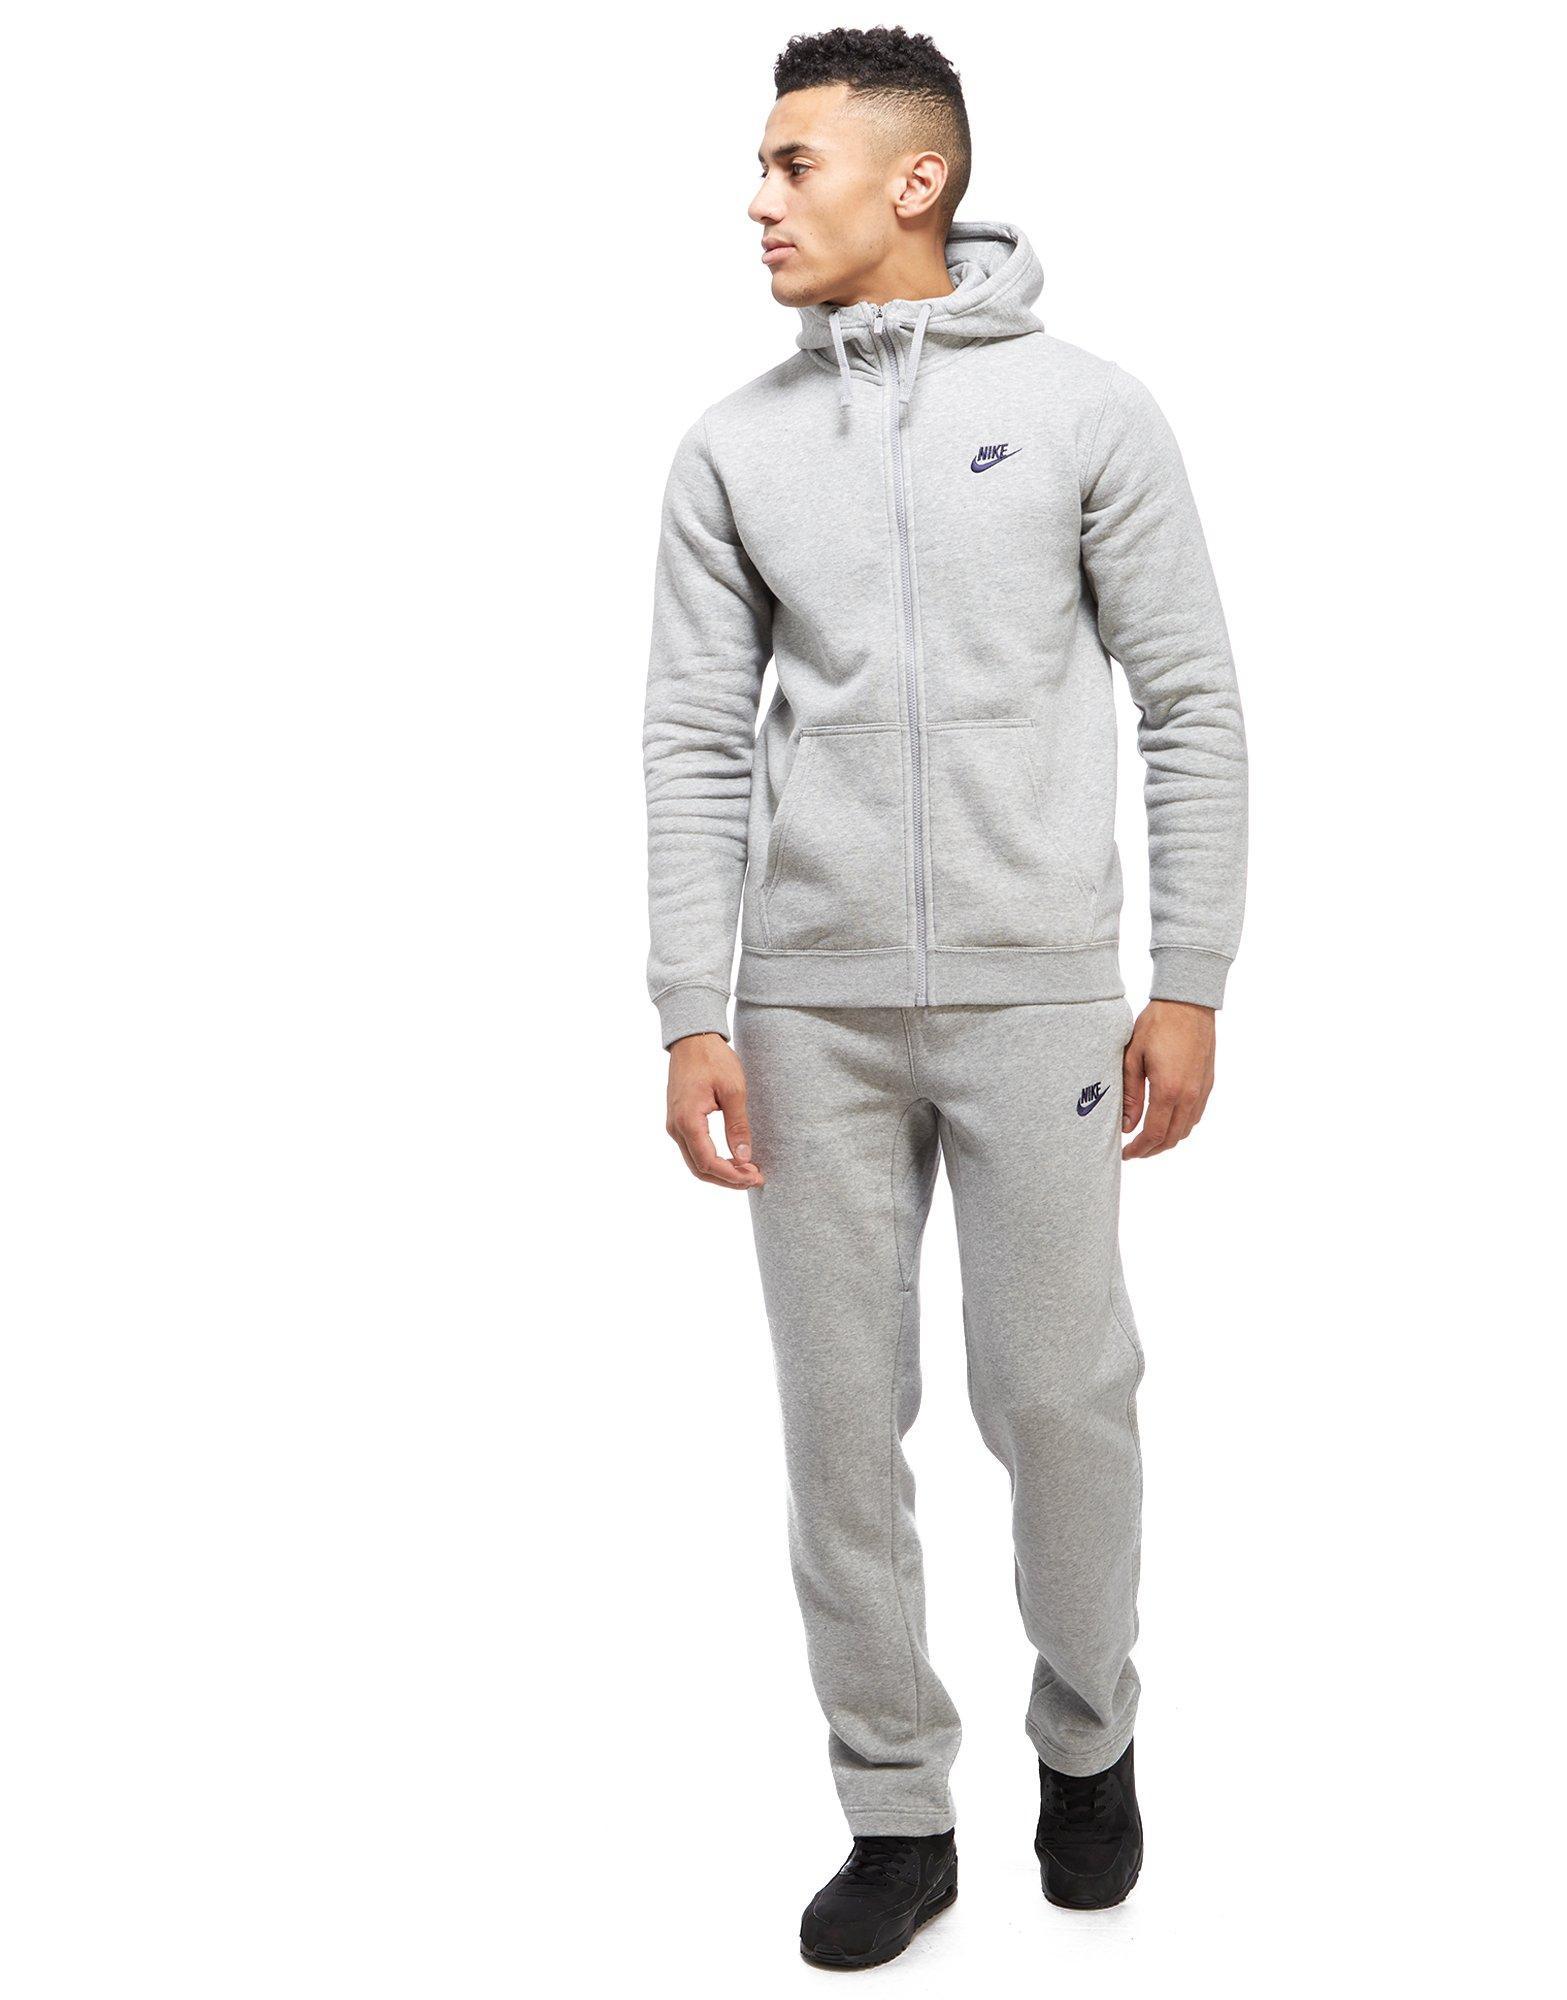 Nike Fleece Foundation Full Zip Hoody in Gray for Men - Lyst